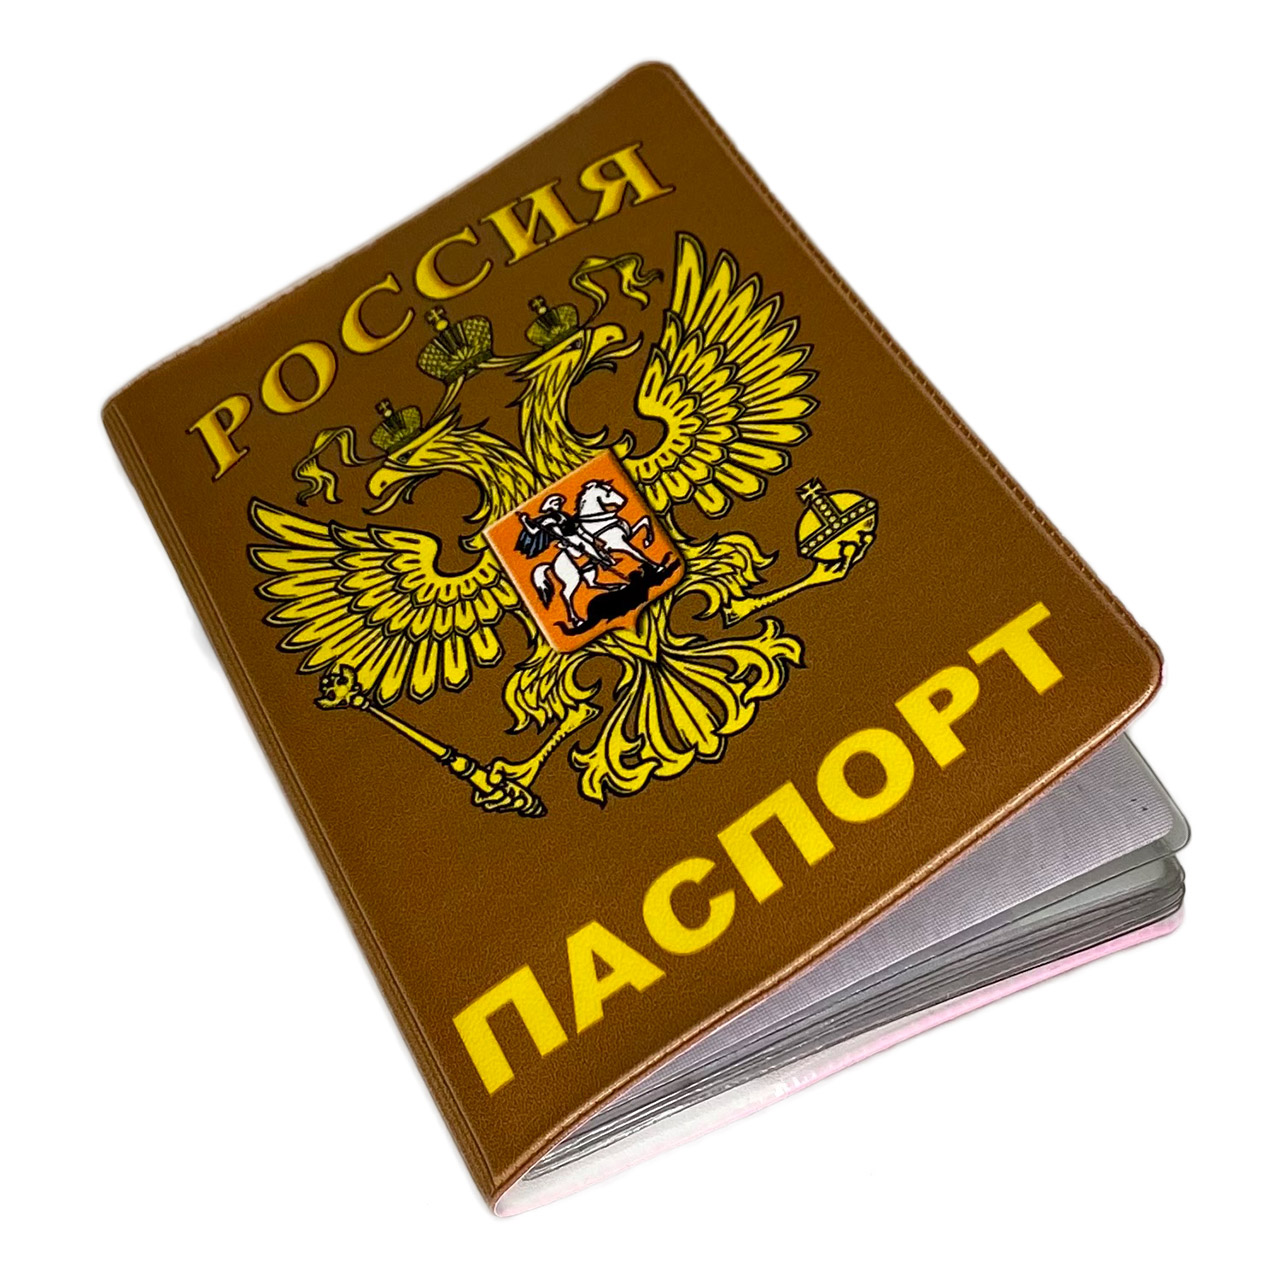 Обложка на паспорт с Путиным